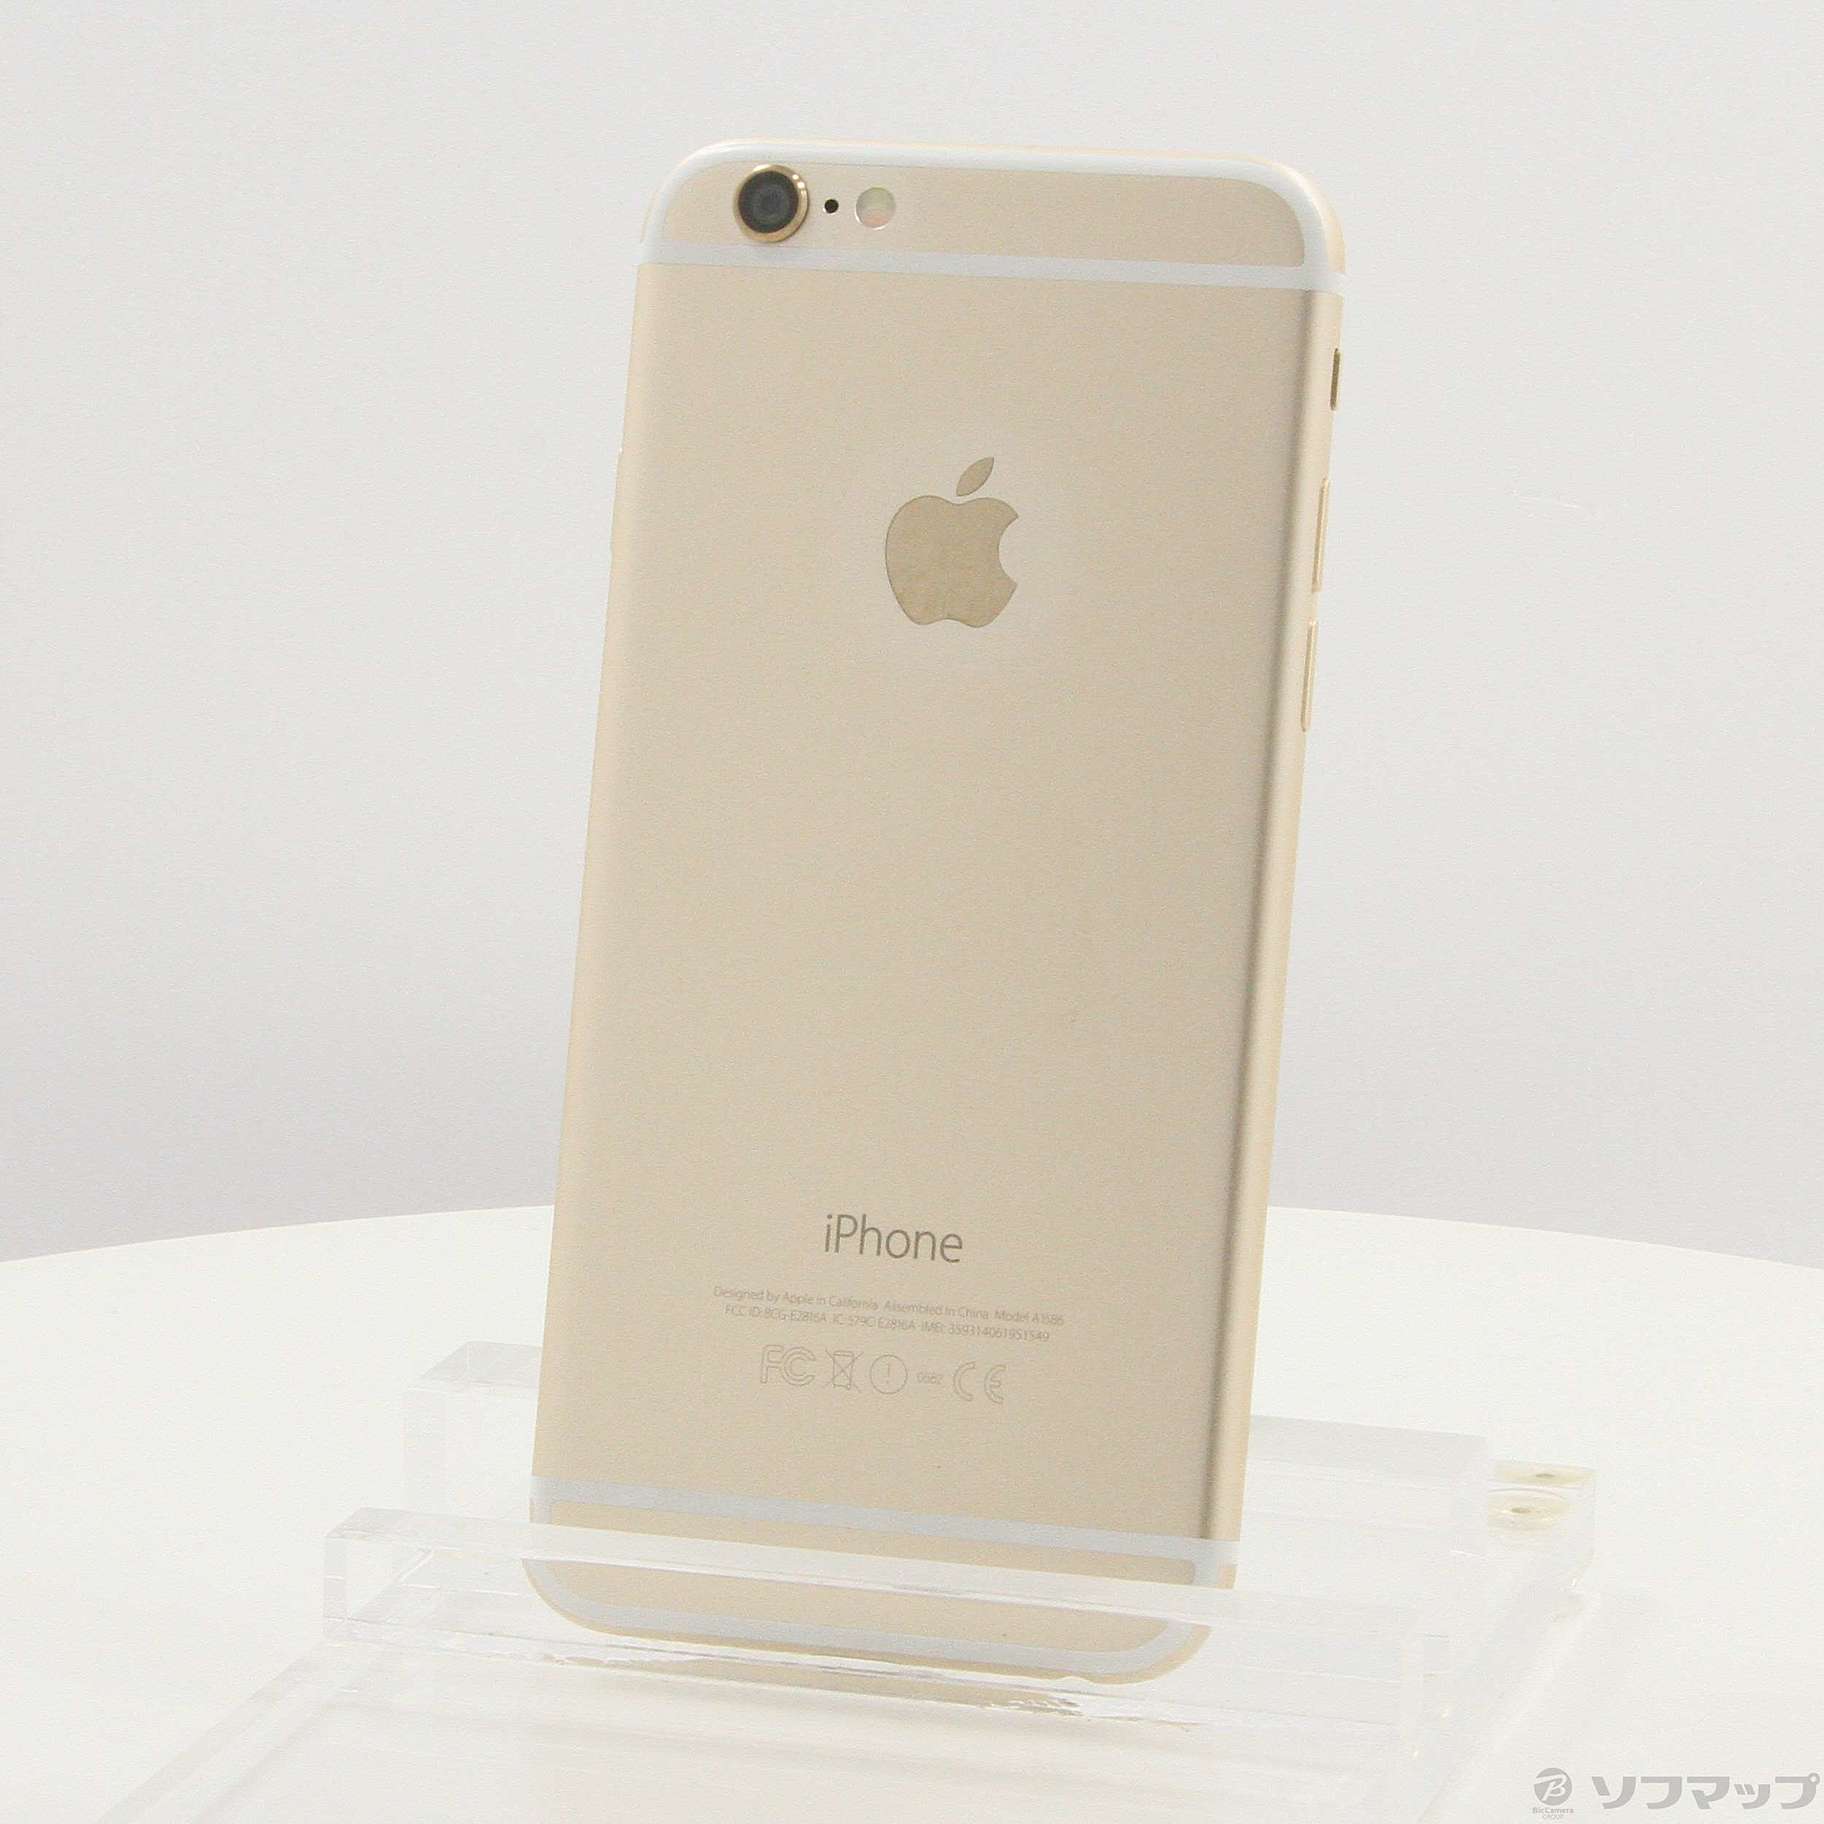 iPhone 6 Silver 16 GB Softbank